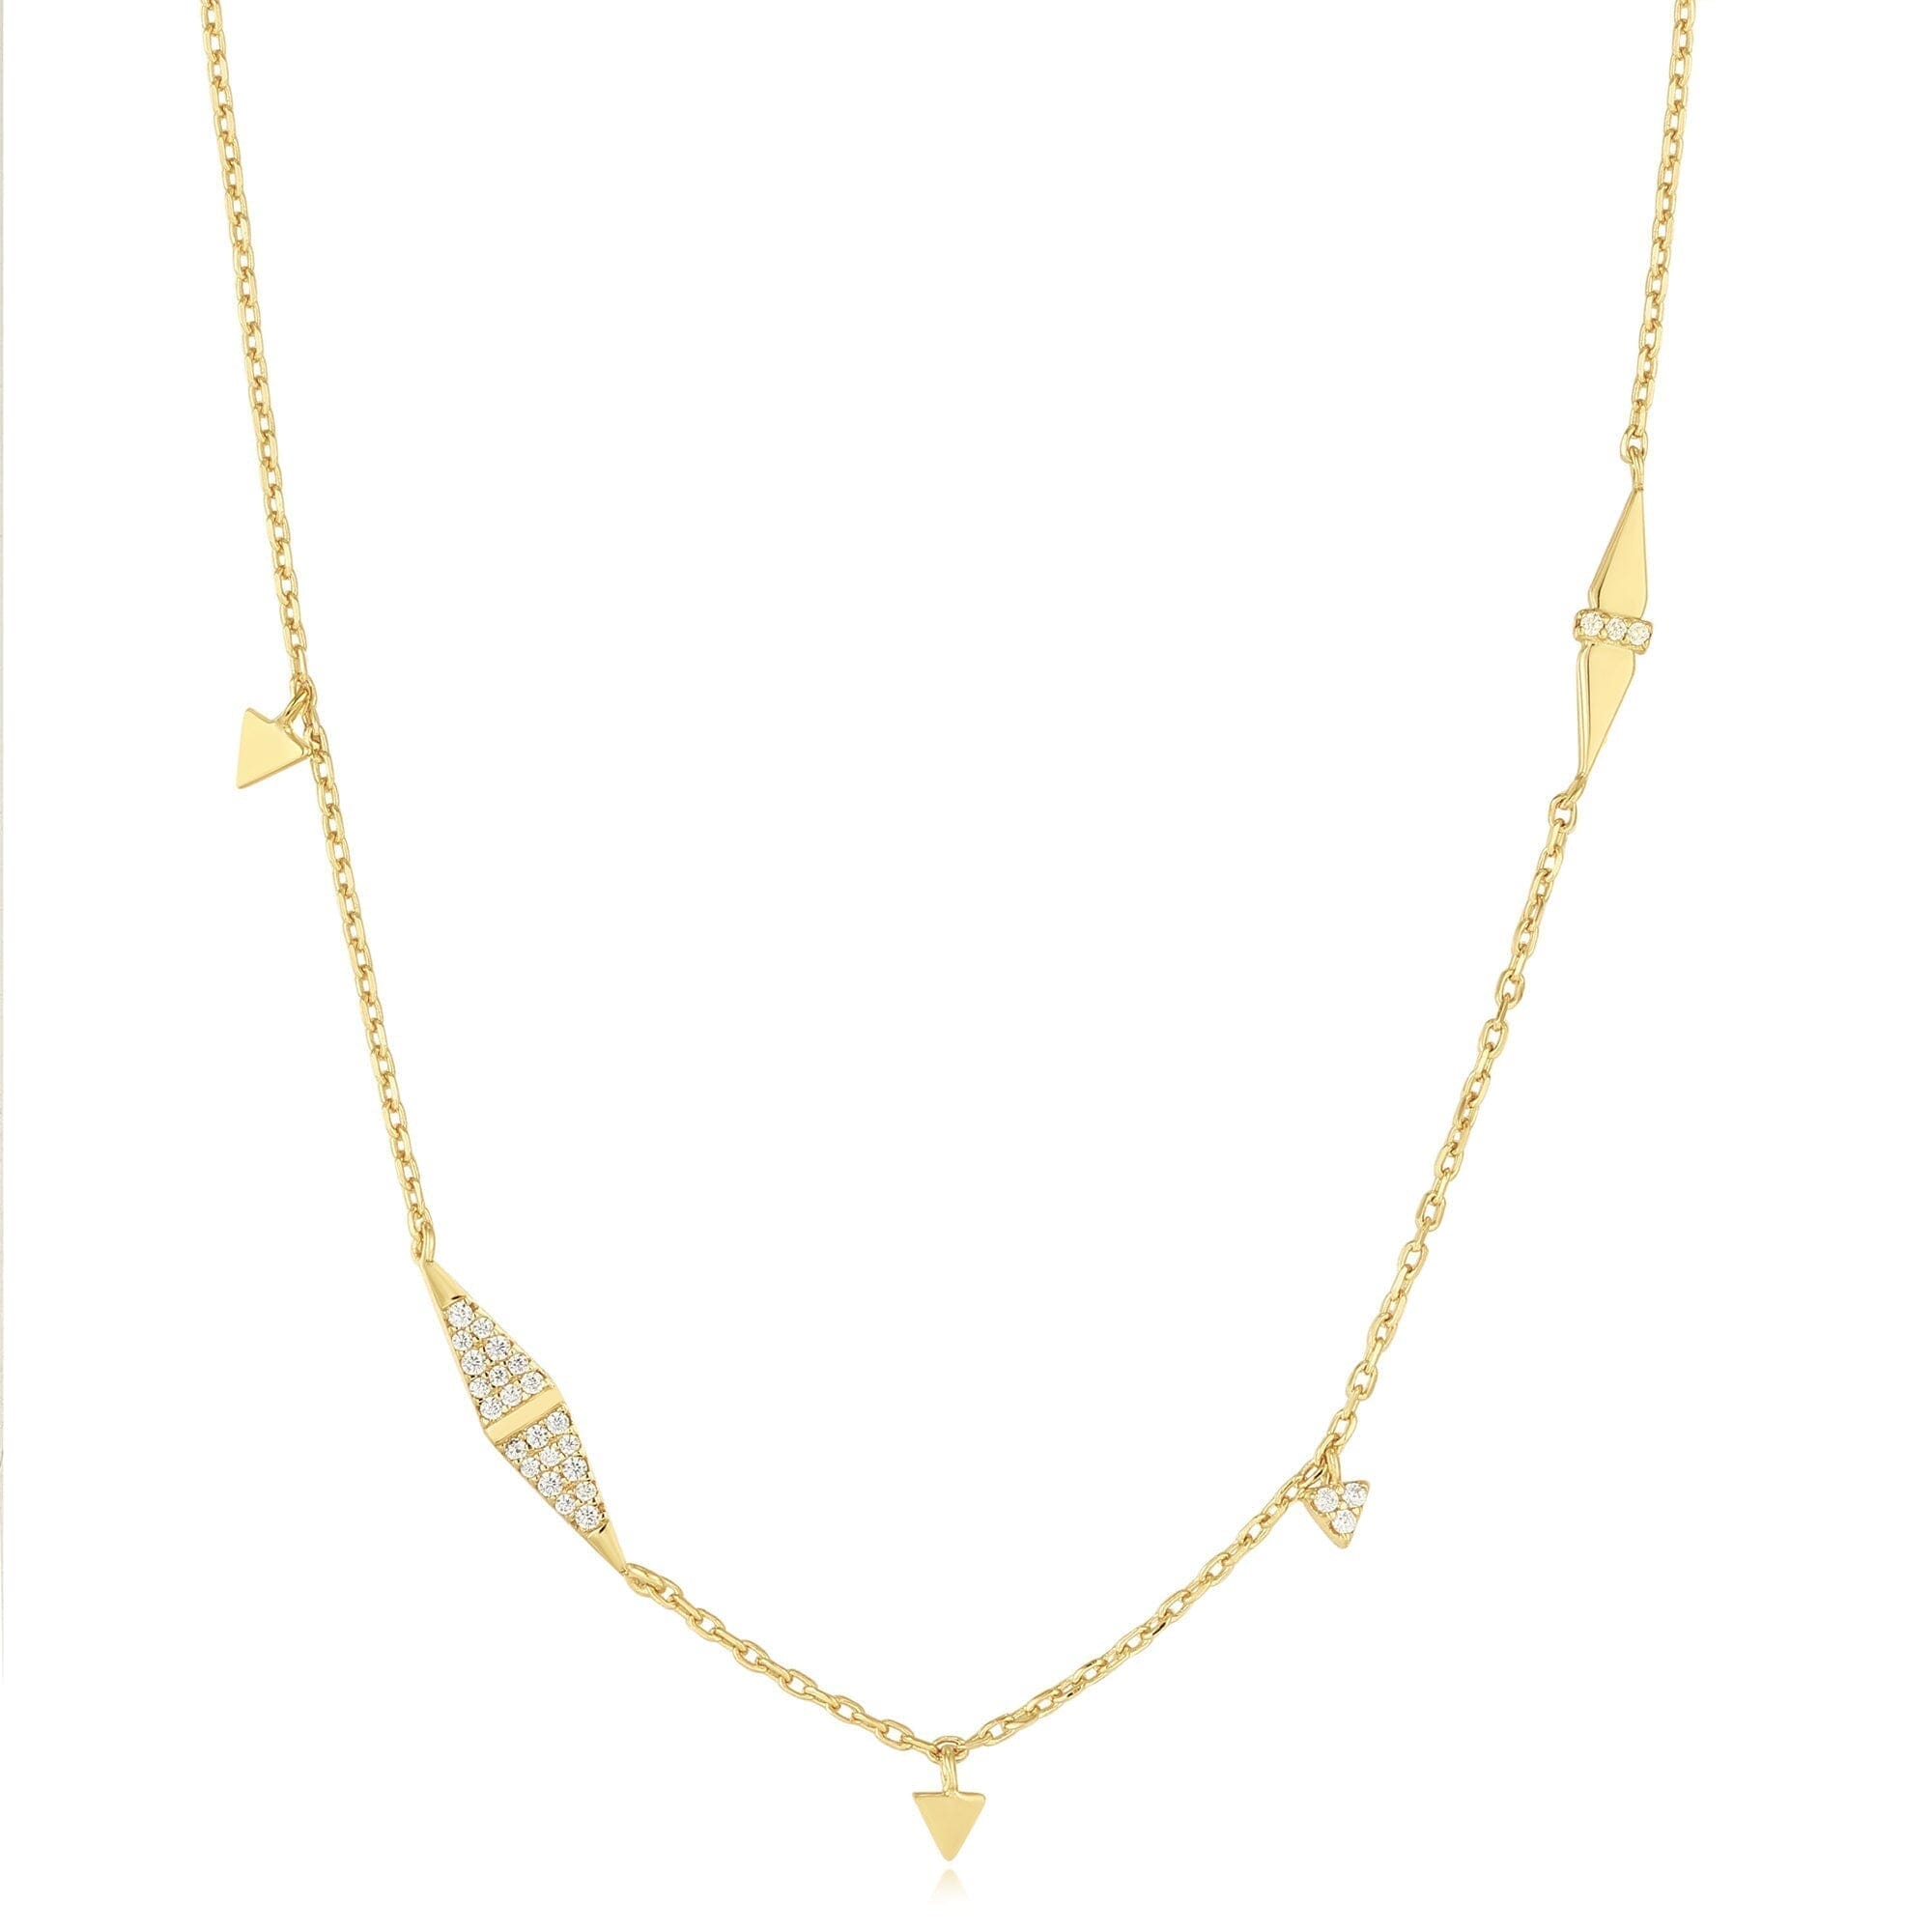 Ania Haie Gold Geometric Sparkle Chain Necklaces Necklaces Ania Haie 